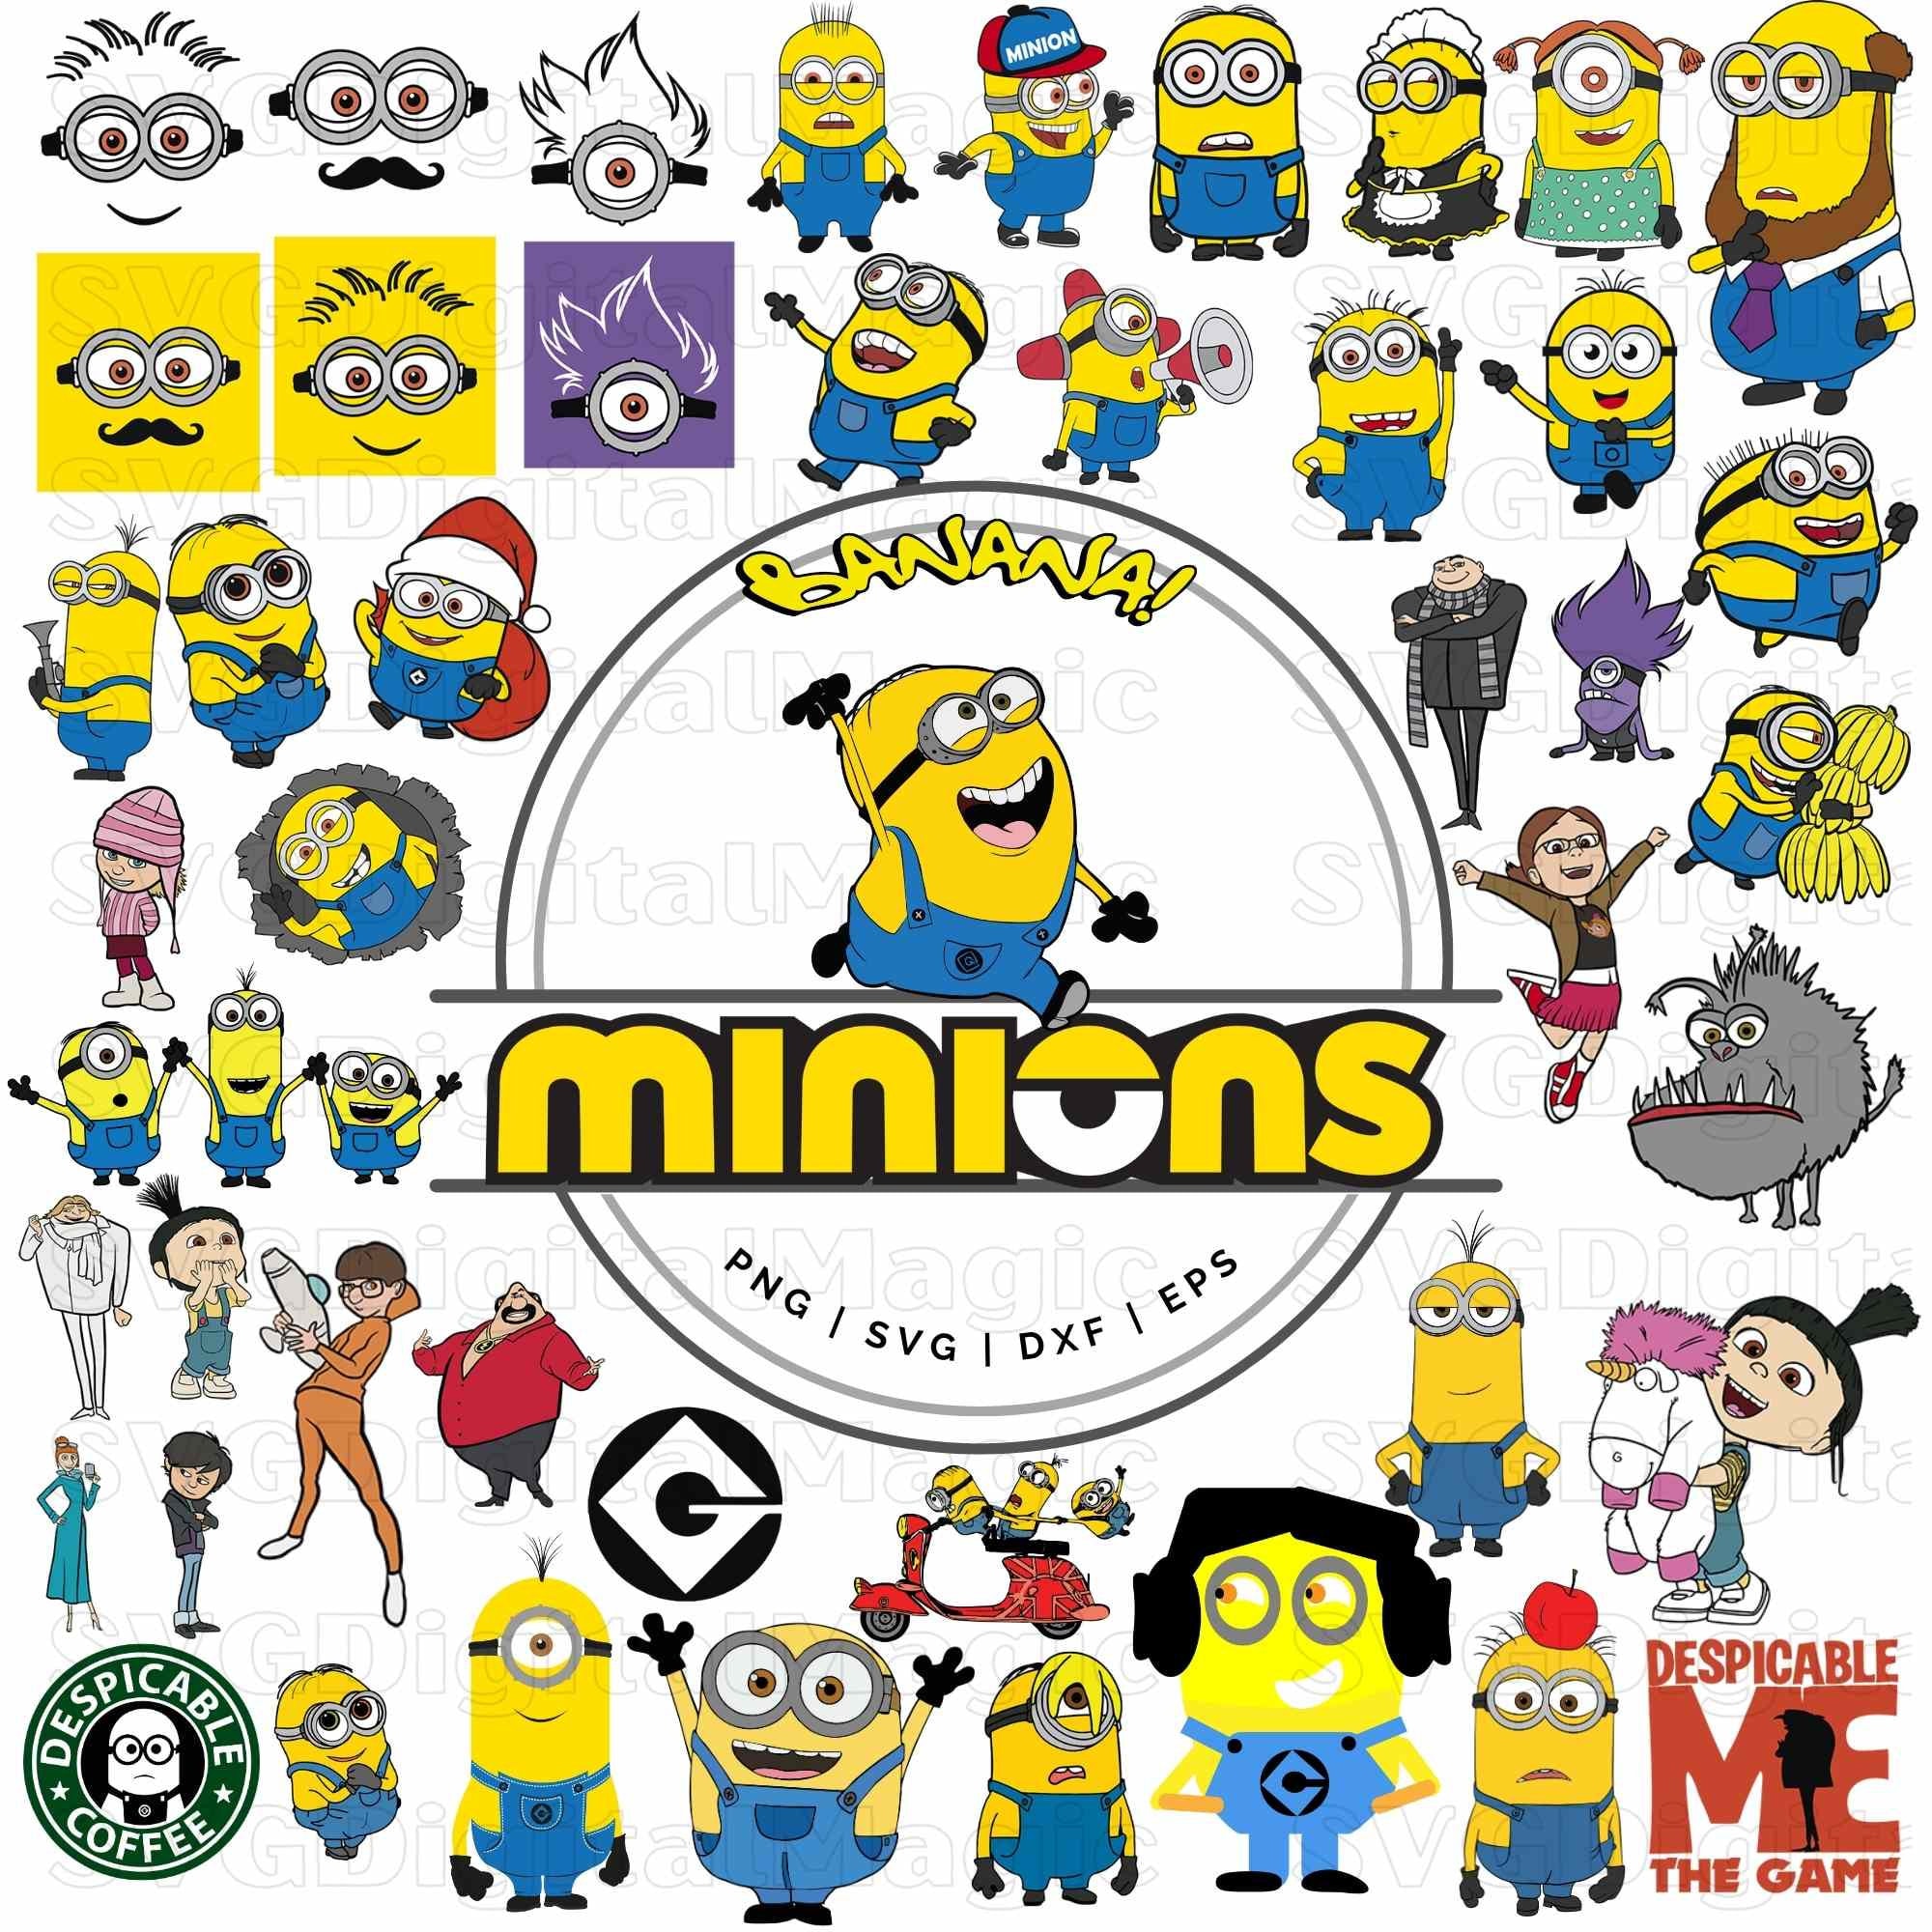 Free: Minion Transparent Background - Despicable Me Minions Hands Up Minion  Sticker 